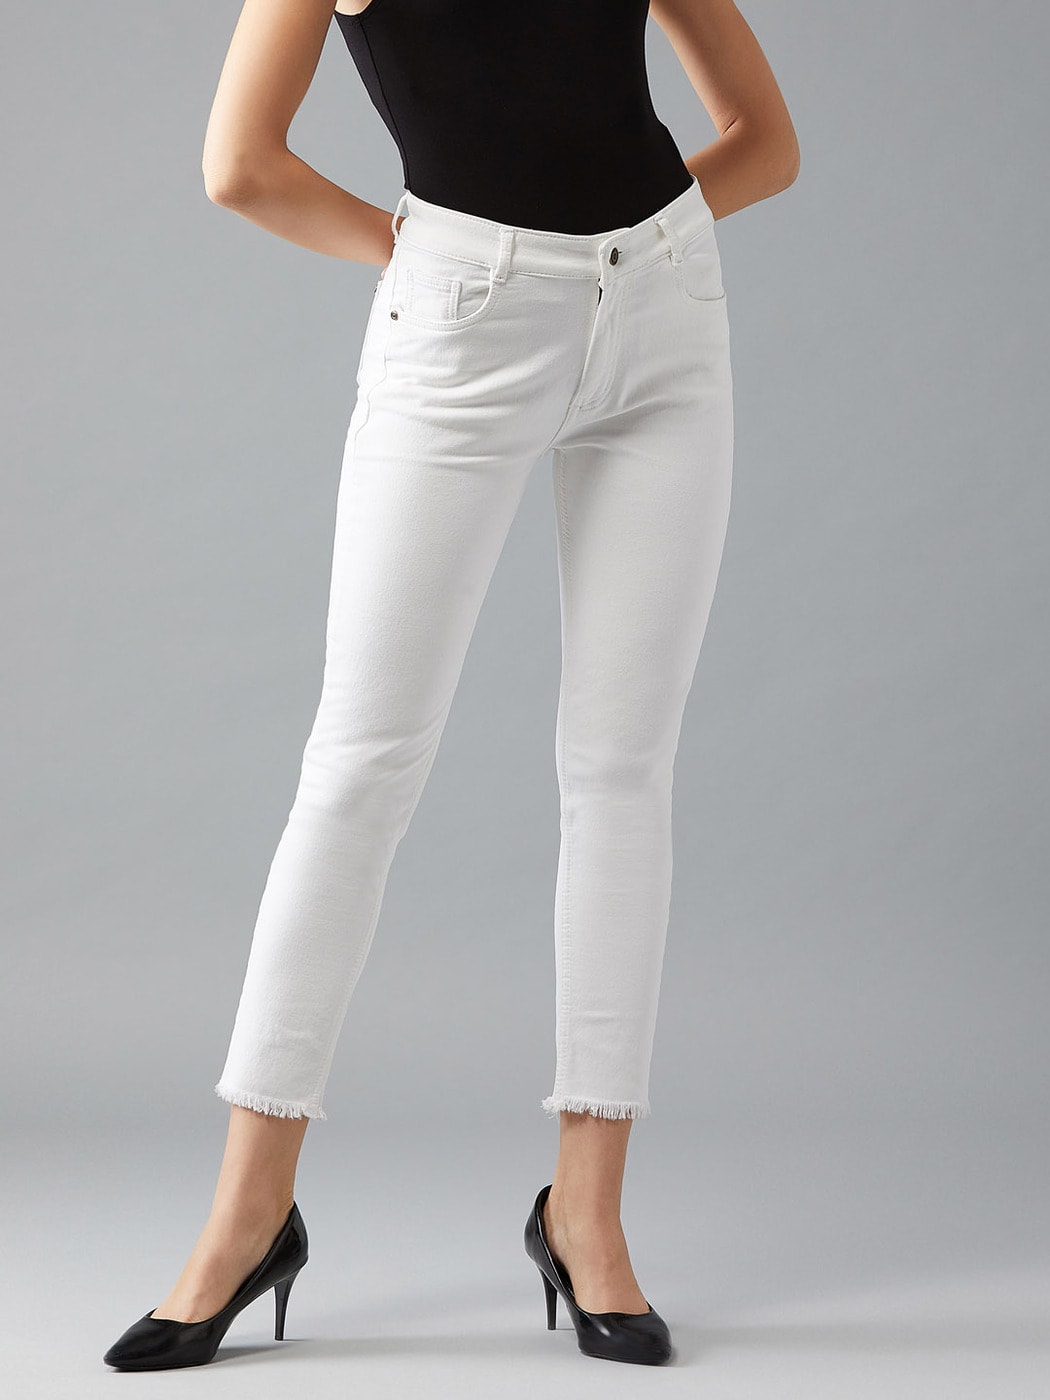 white skinny jeans with frayed hem